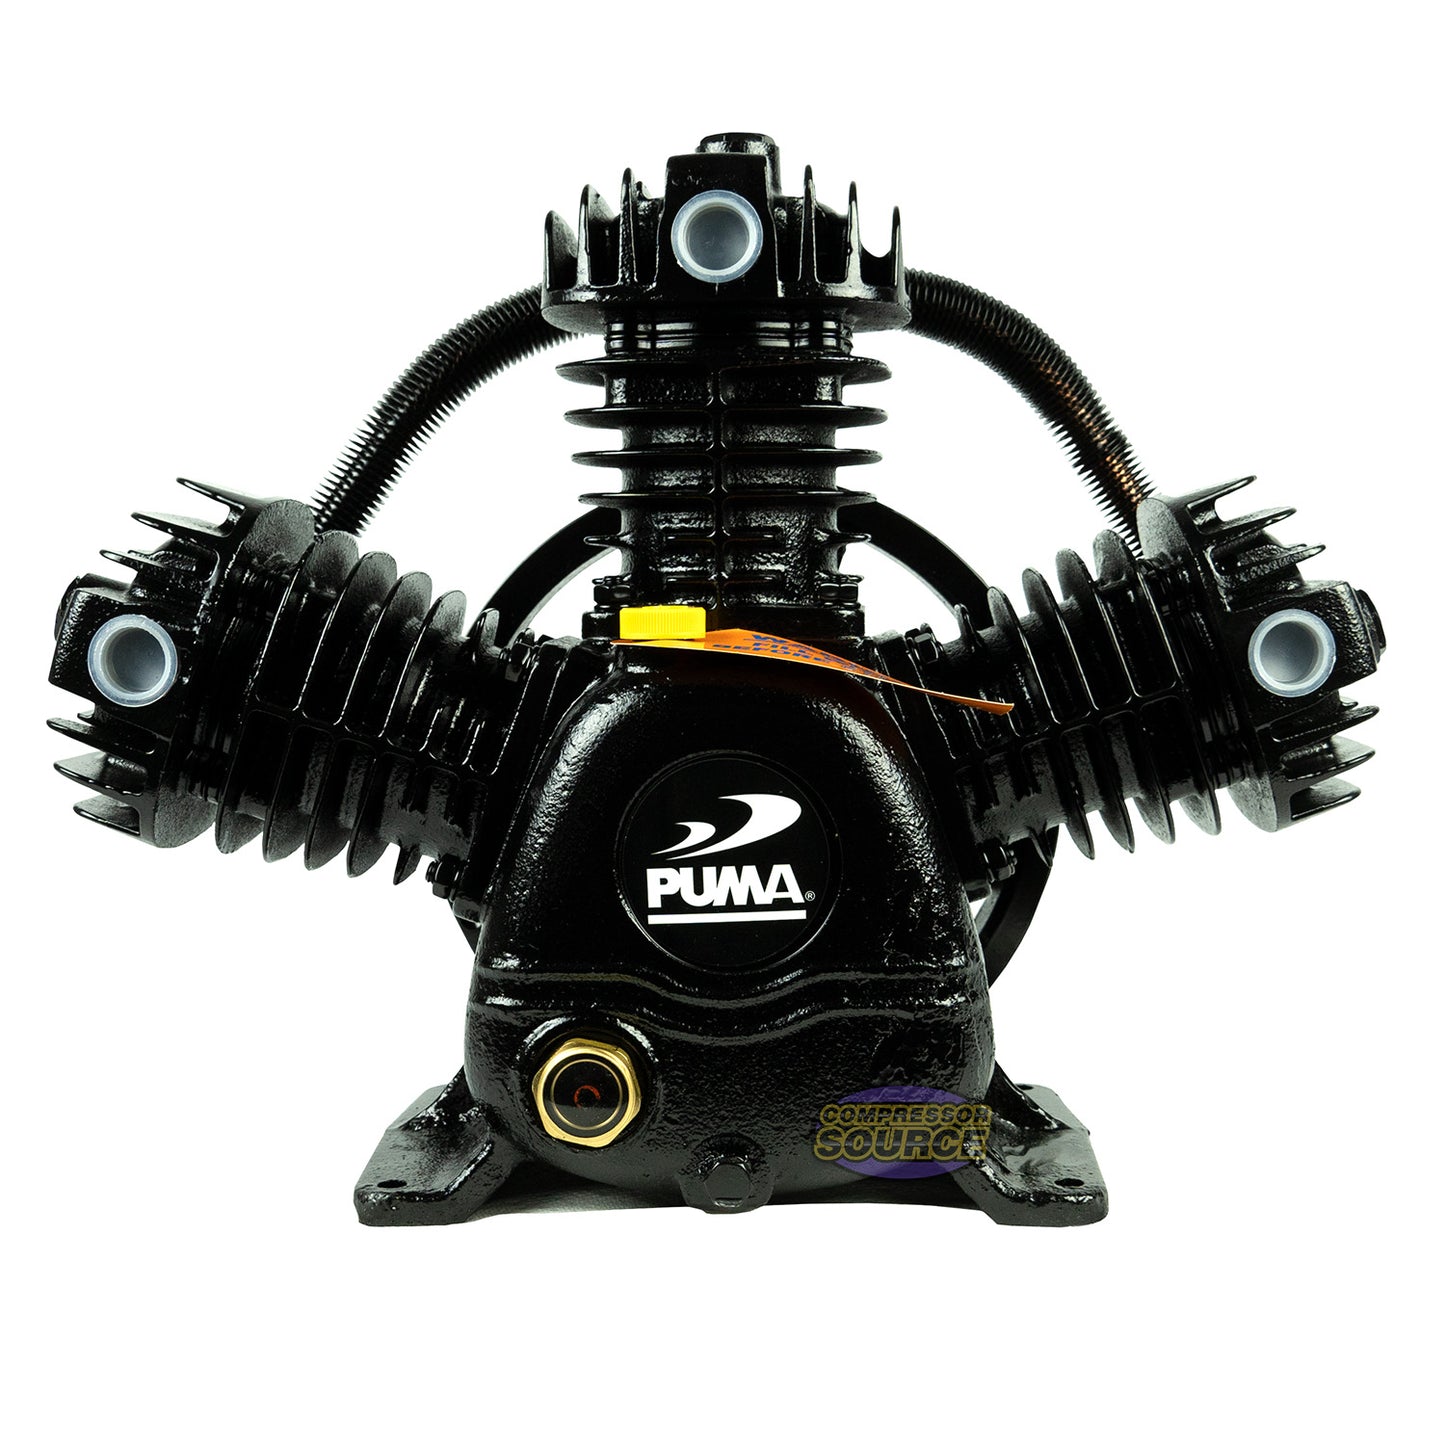 Puma 3 Cylinder 1 Single Stage Cast Iron Air Compressor Pump 22 SCFM PUK-65R